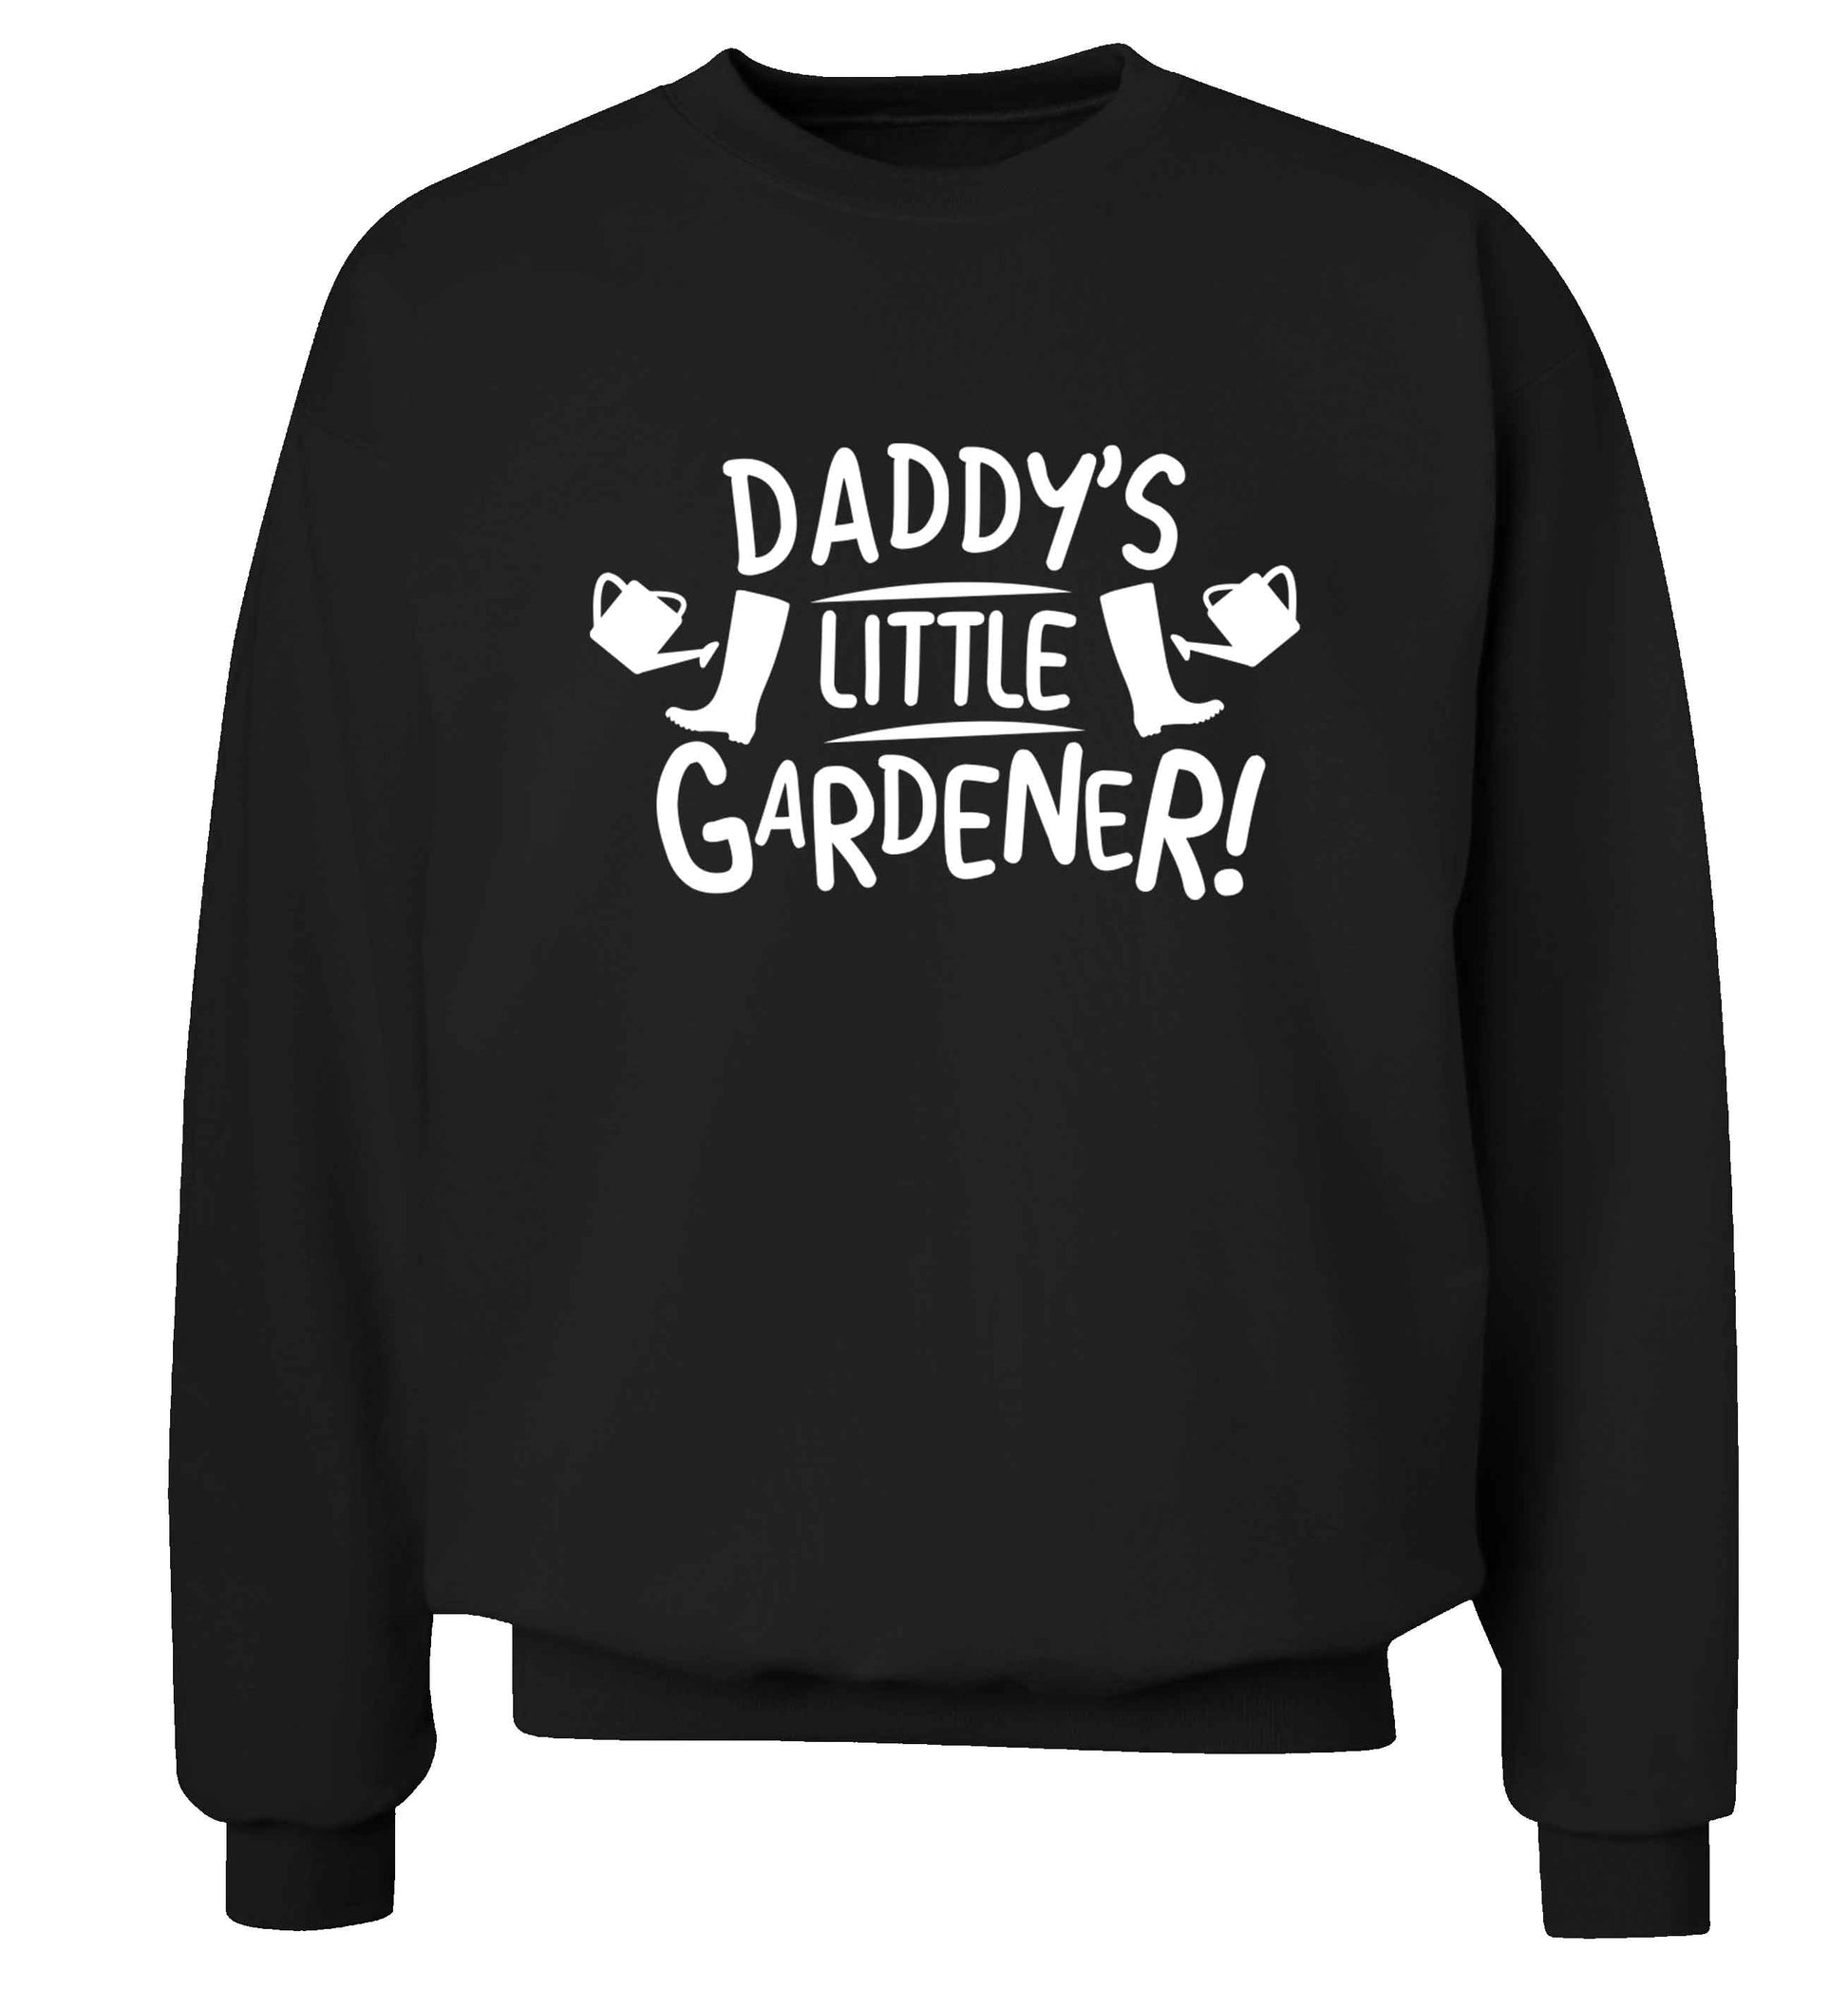 Daddy's little gardener Adult's unisex black Sweater 2XL